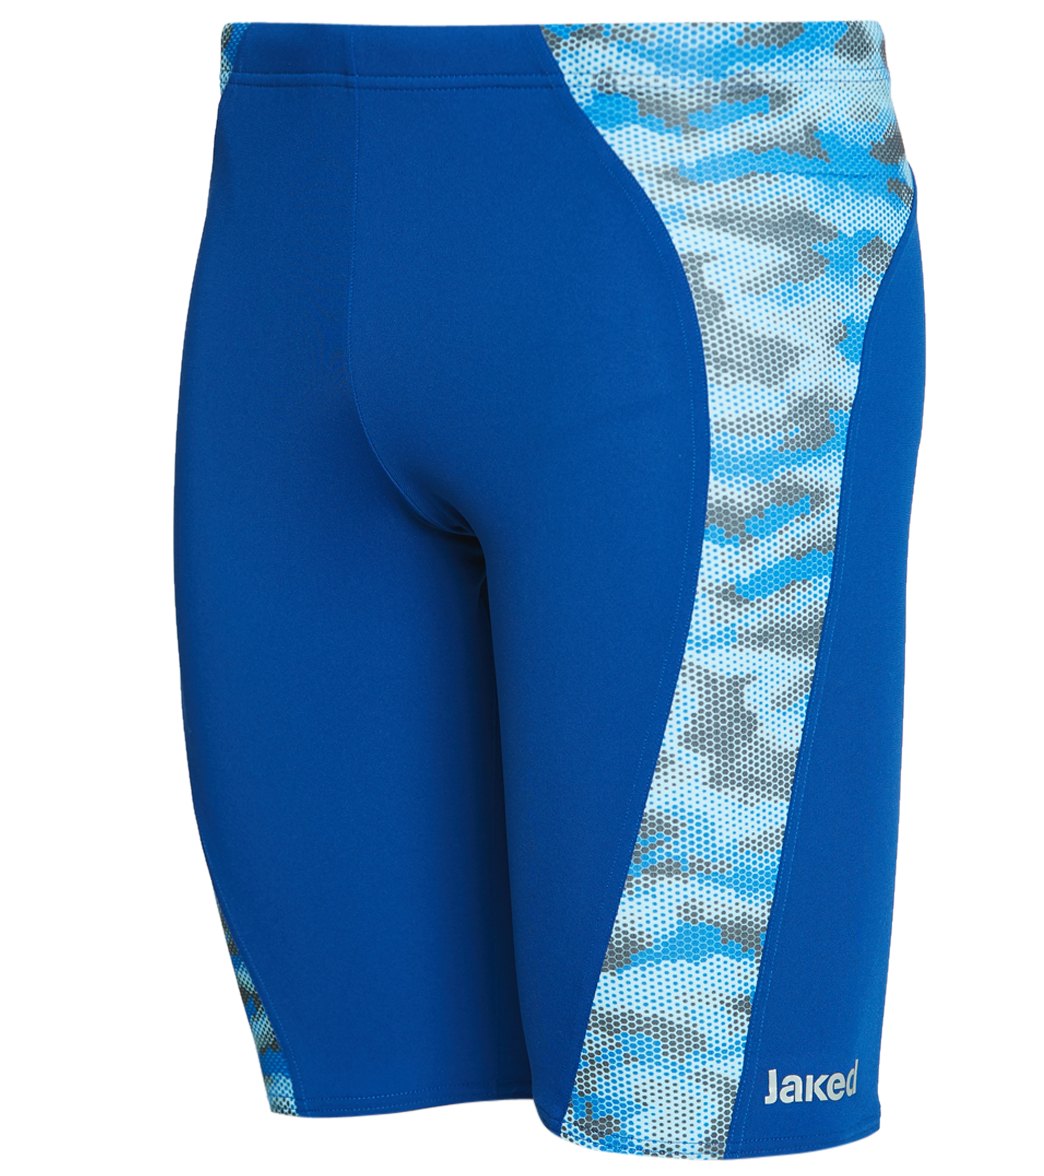 Jaked Men's Pixie Jammer Swimsuit - Blue 28 - Swimoutlet.com